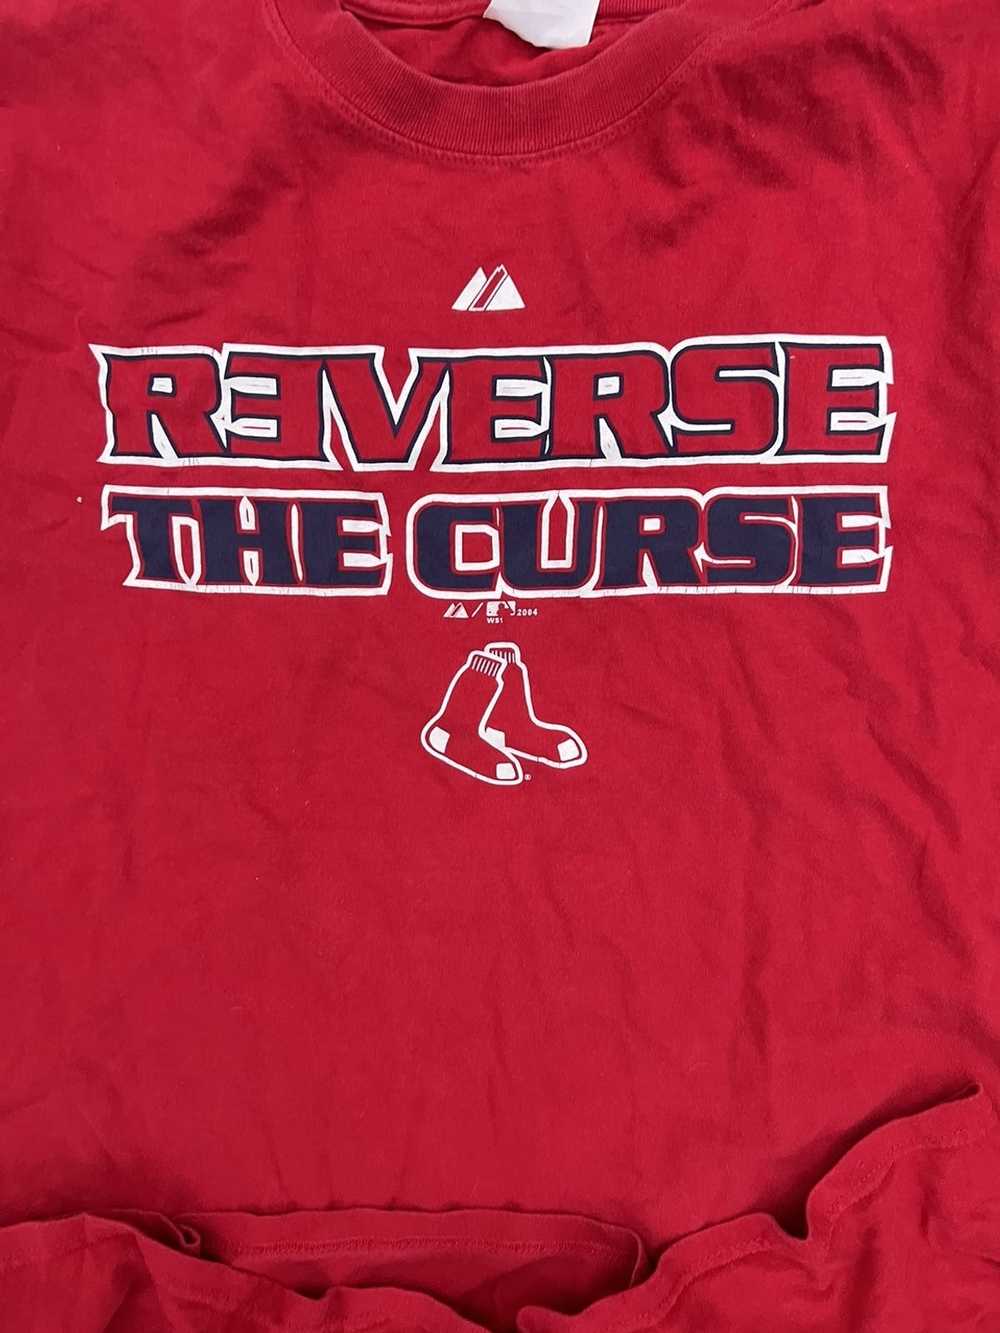 Vintage Boston Red Sox shirt - image 1